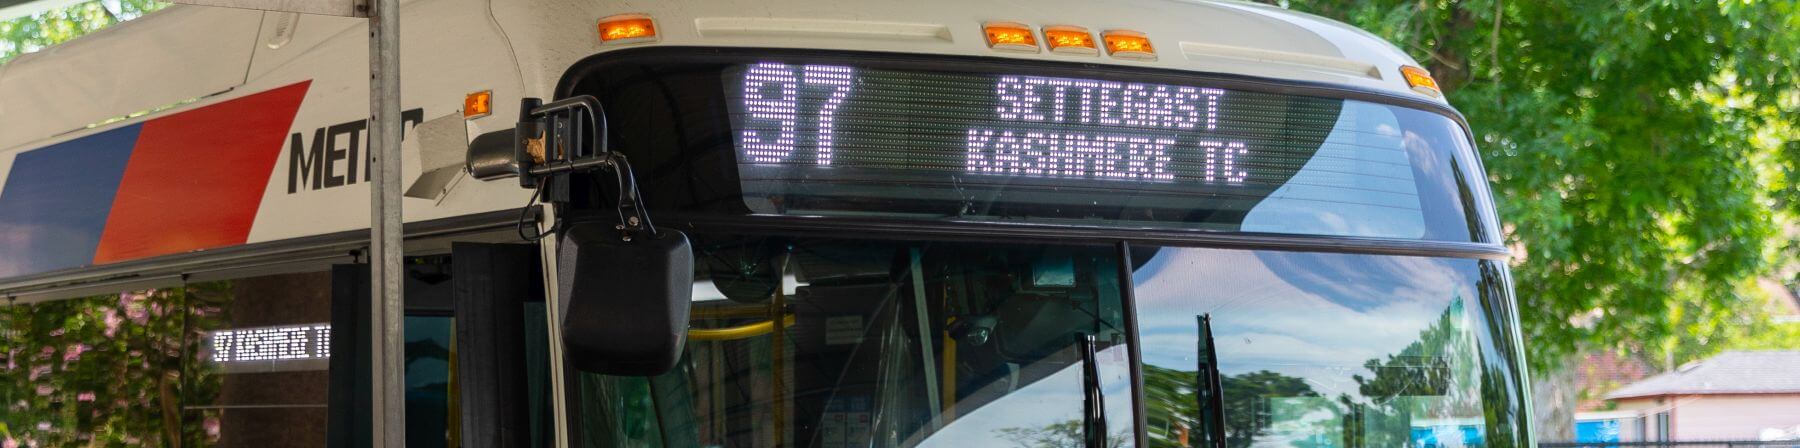 97 Settegast bus